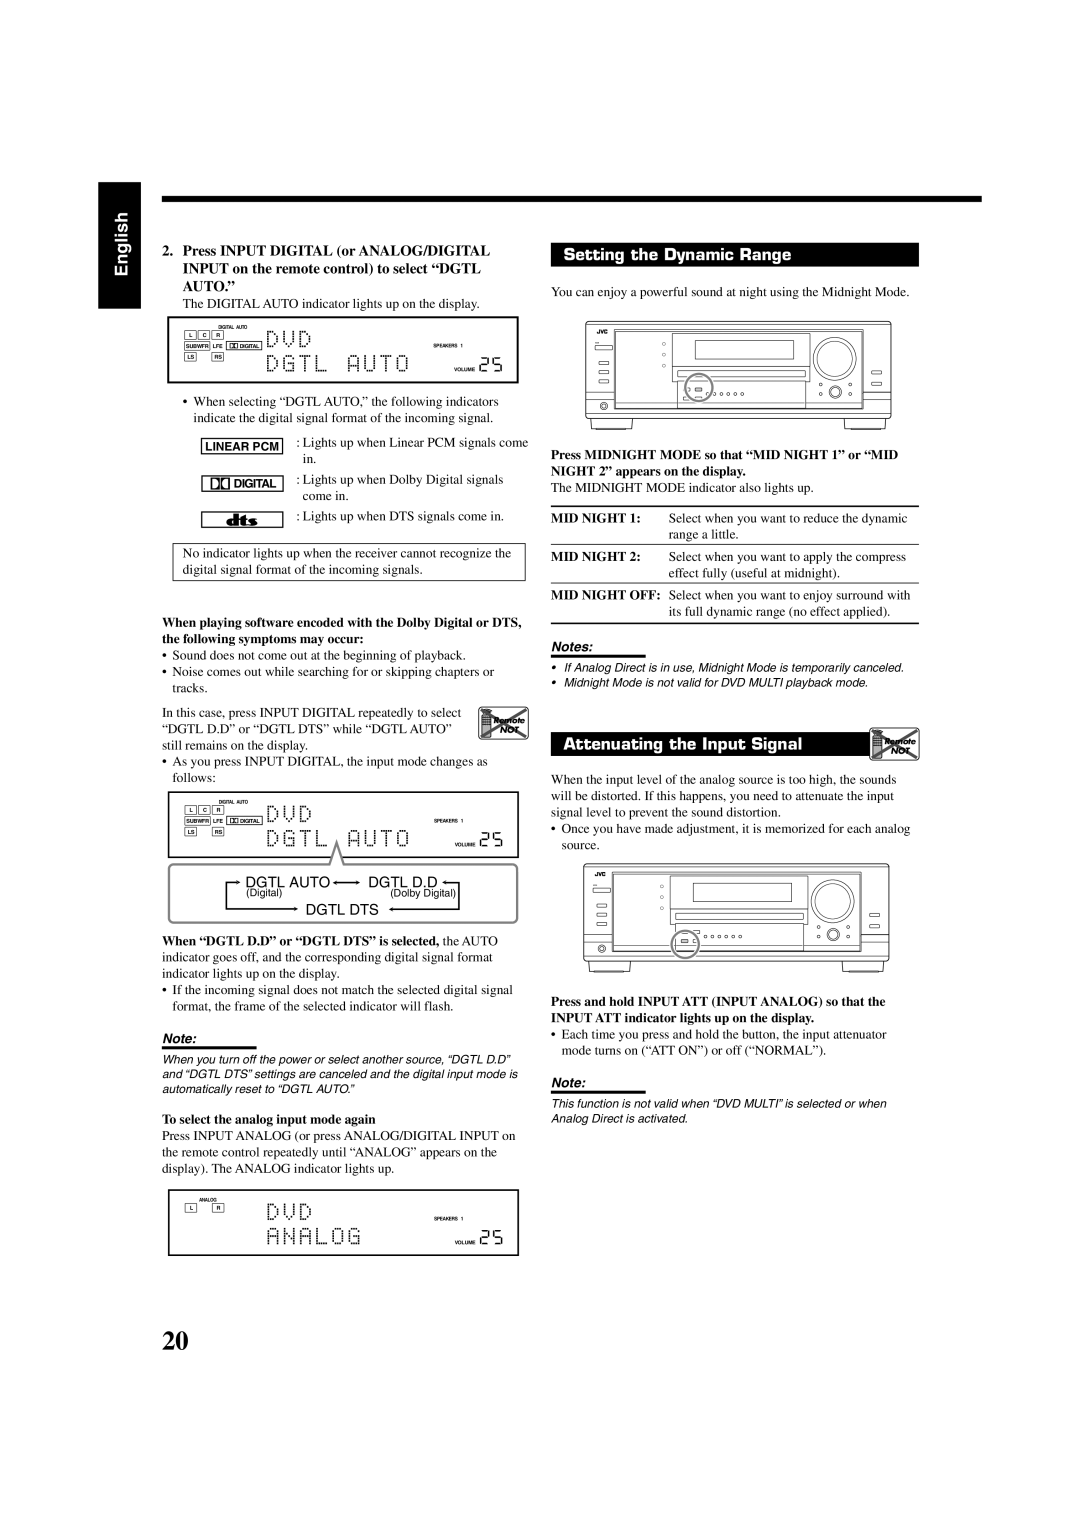 JVC RX7030VBK manual English, Setting the Dynamic Range, Attenuating the Input Signal, Dgtl Auto, Dgtl D.D, Dgtl Dts, Notes 